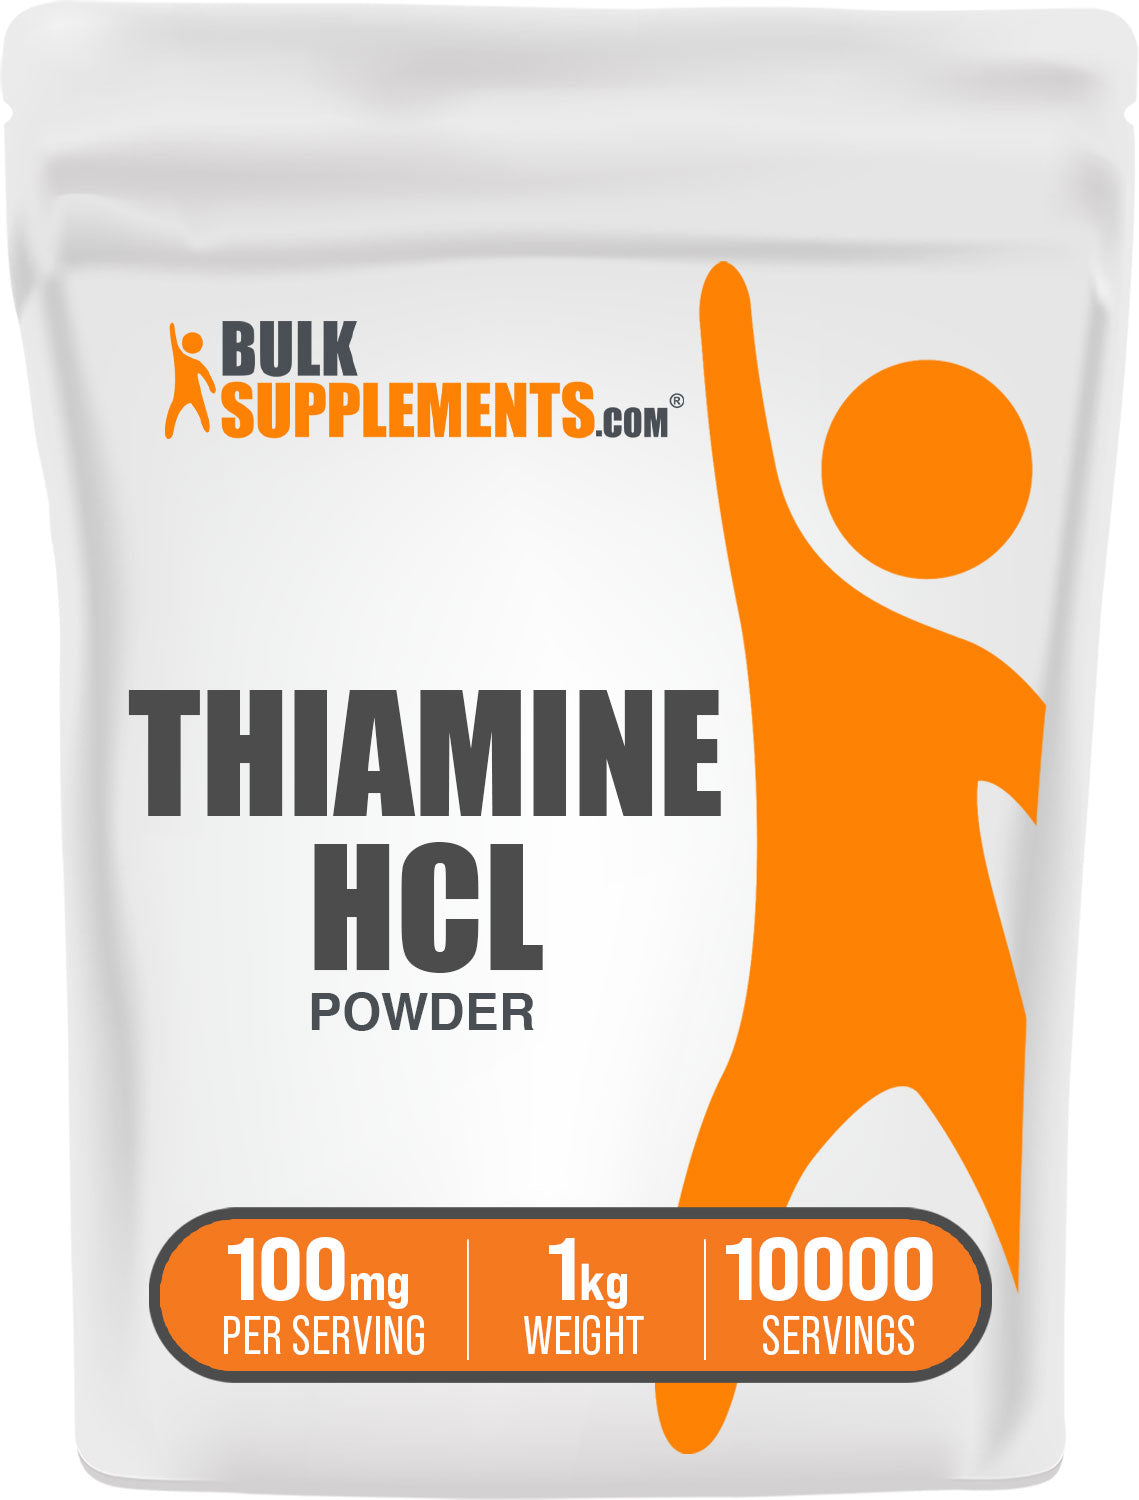 BulkSupplements Thiamine HCl Powder 1kg bag